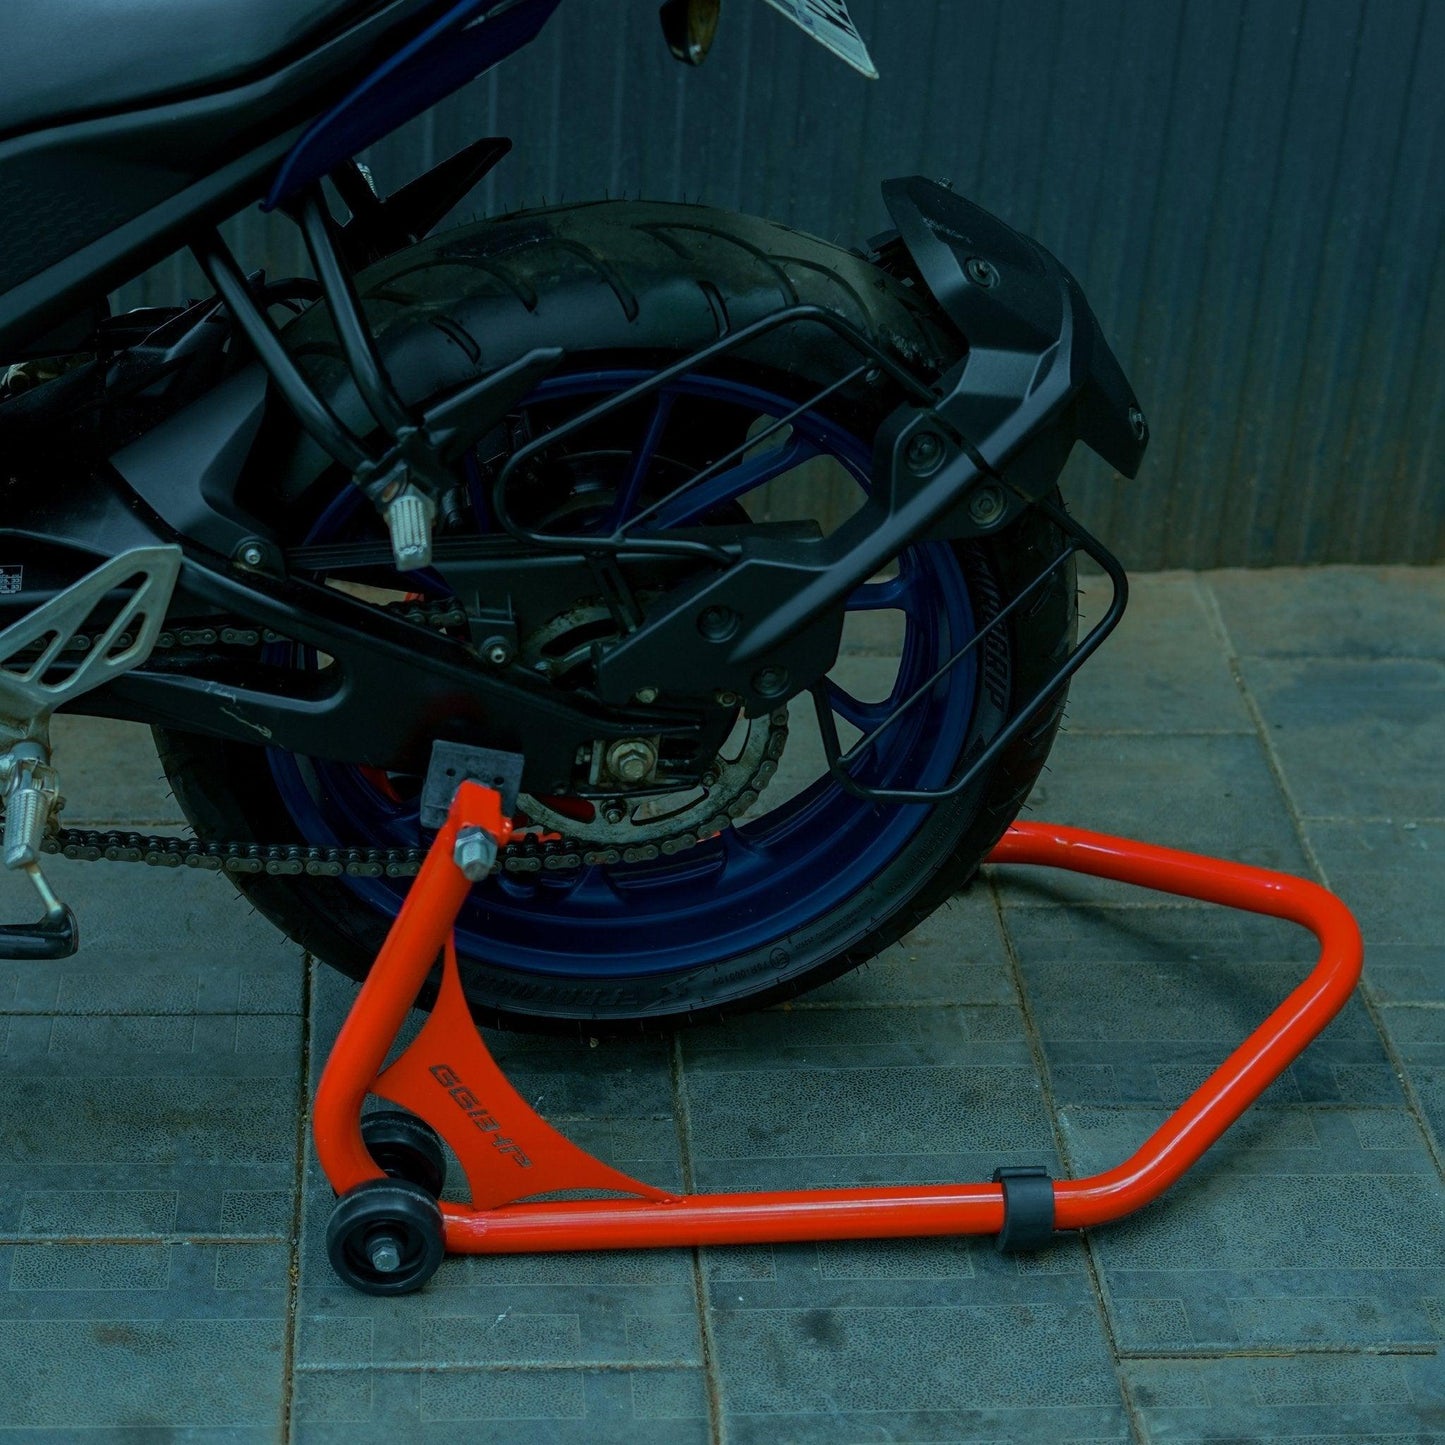 66Bhp Universal Motorcycle Paddock Stand - Moto Modz